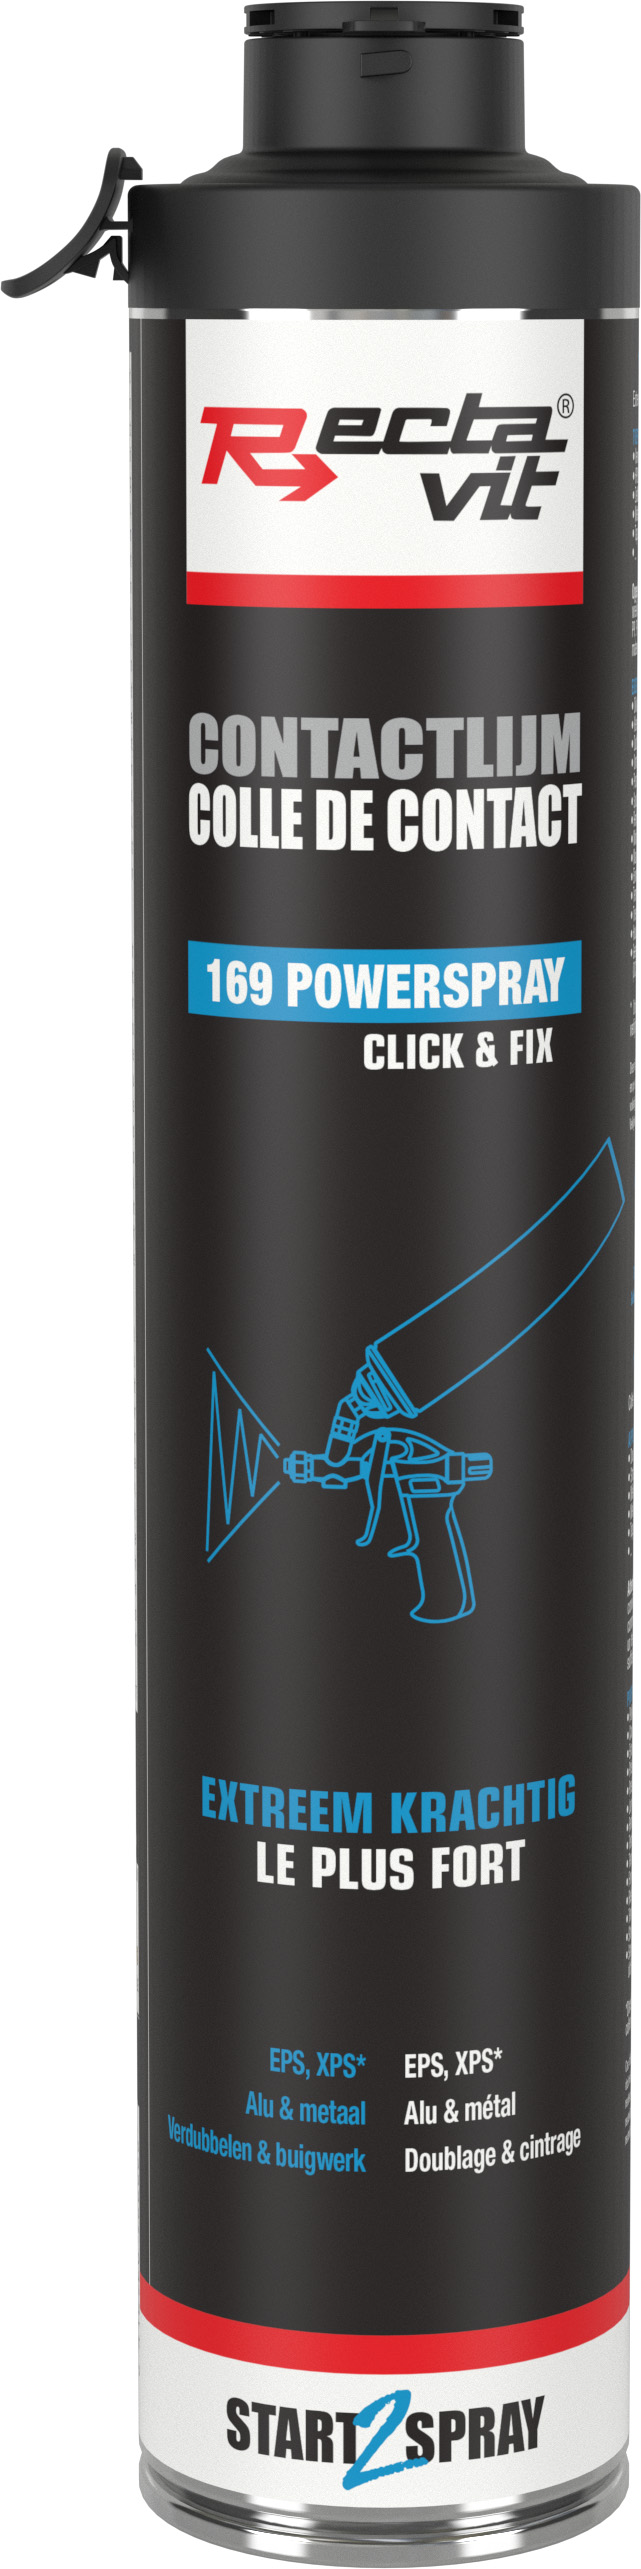 Rectavit 169 Powerspray Click & Fix 750ml